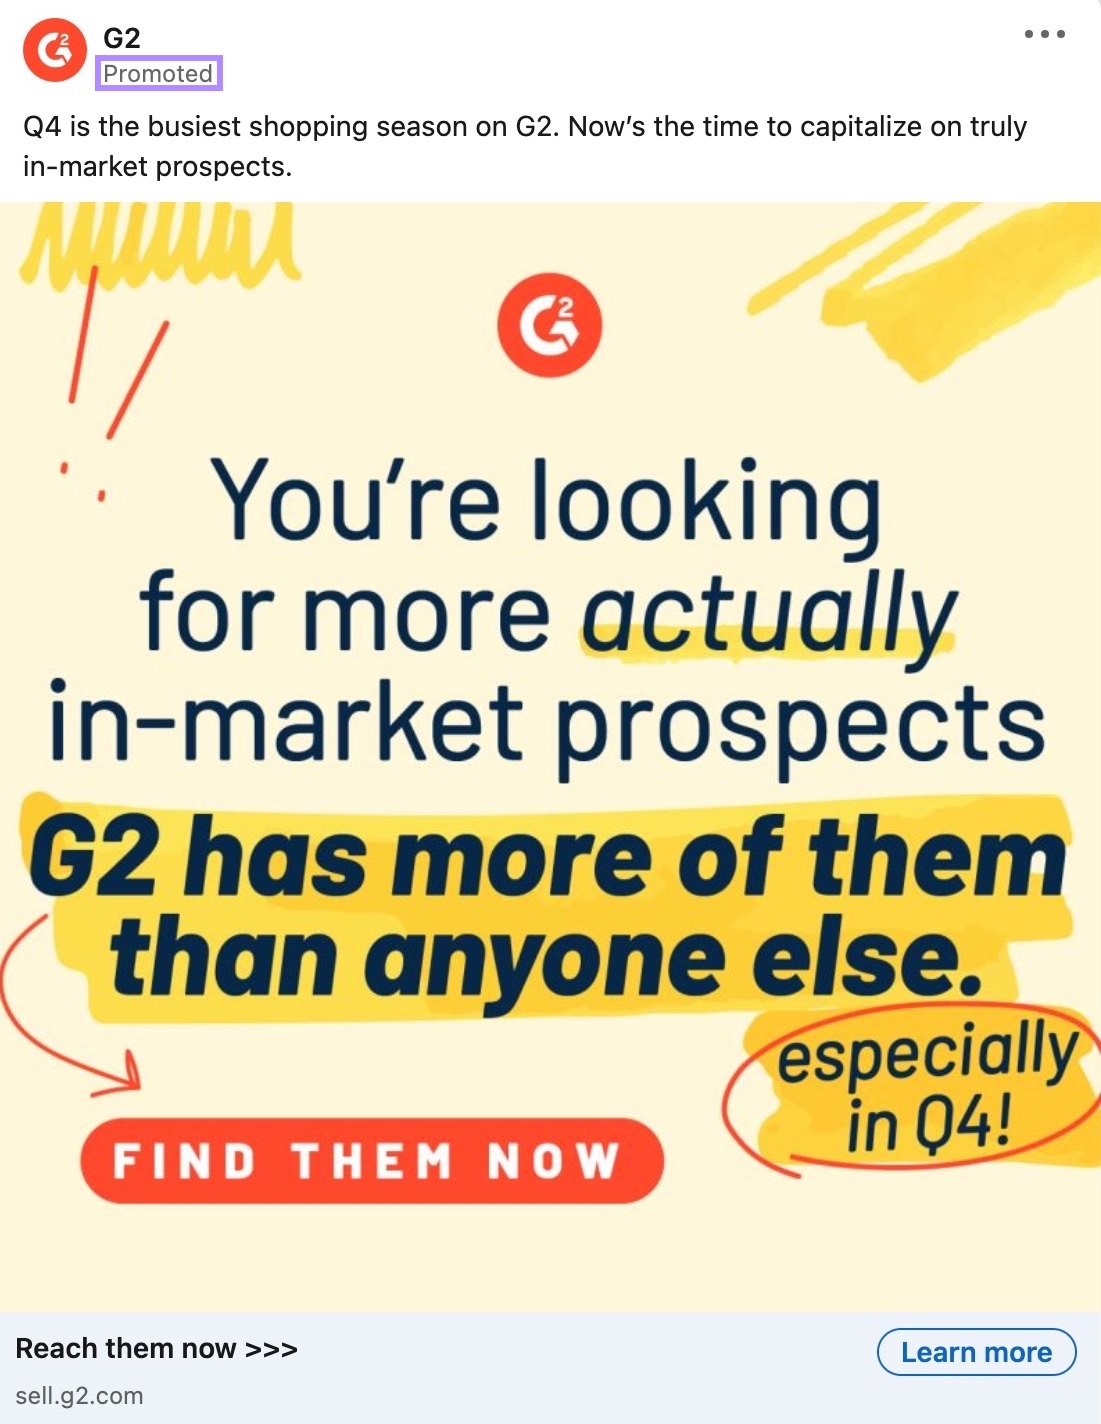 G2's LinkedIn ad